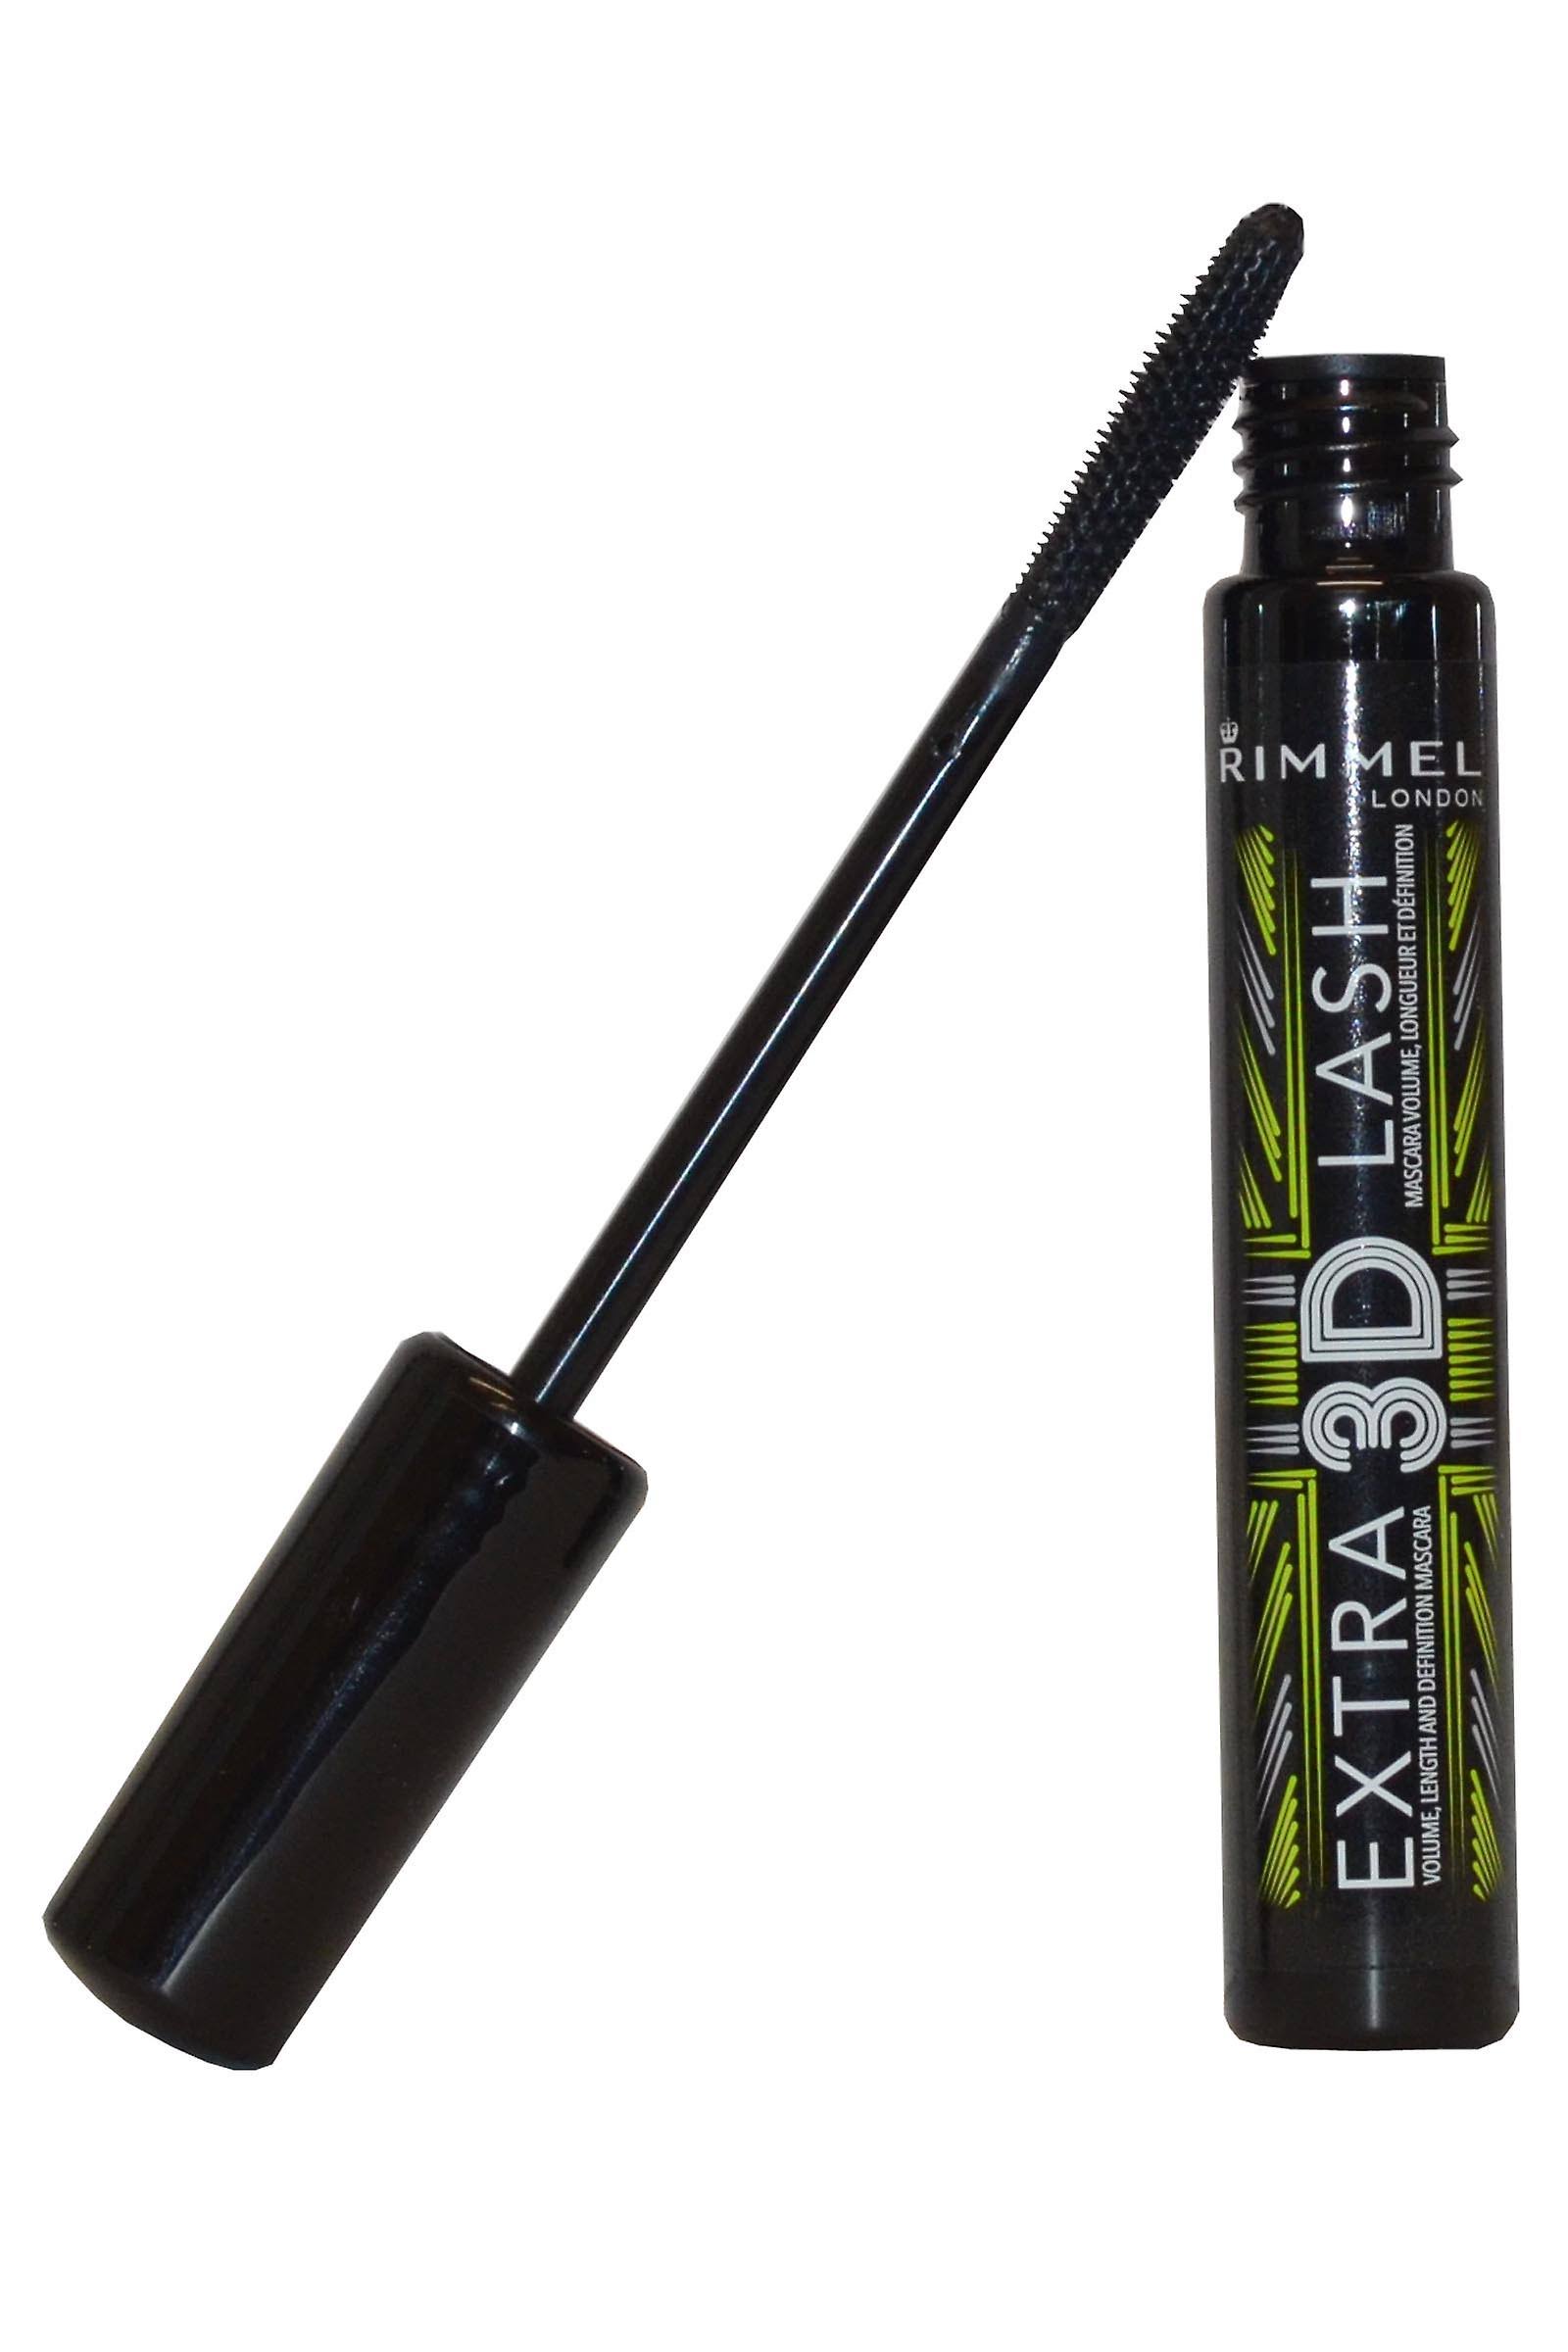 Rimmel London Extra 3D Lash Mascara - 003 Extreme Black, 8ml